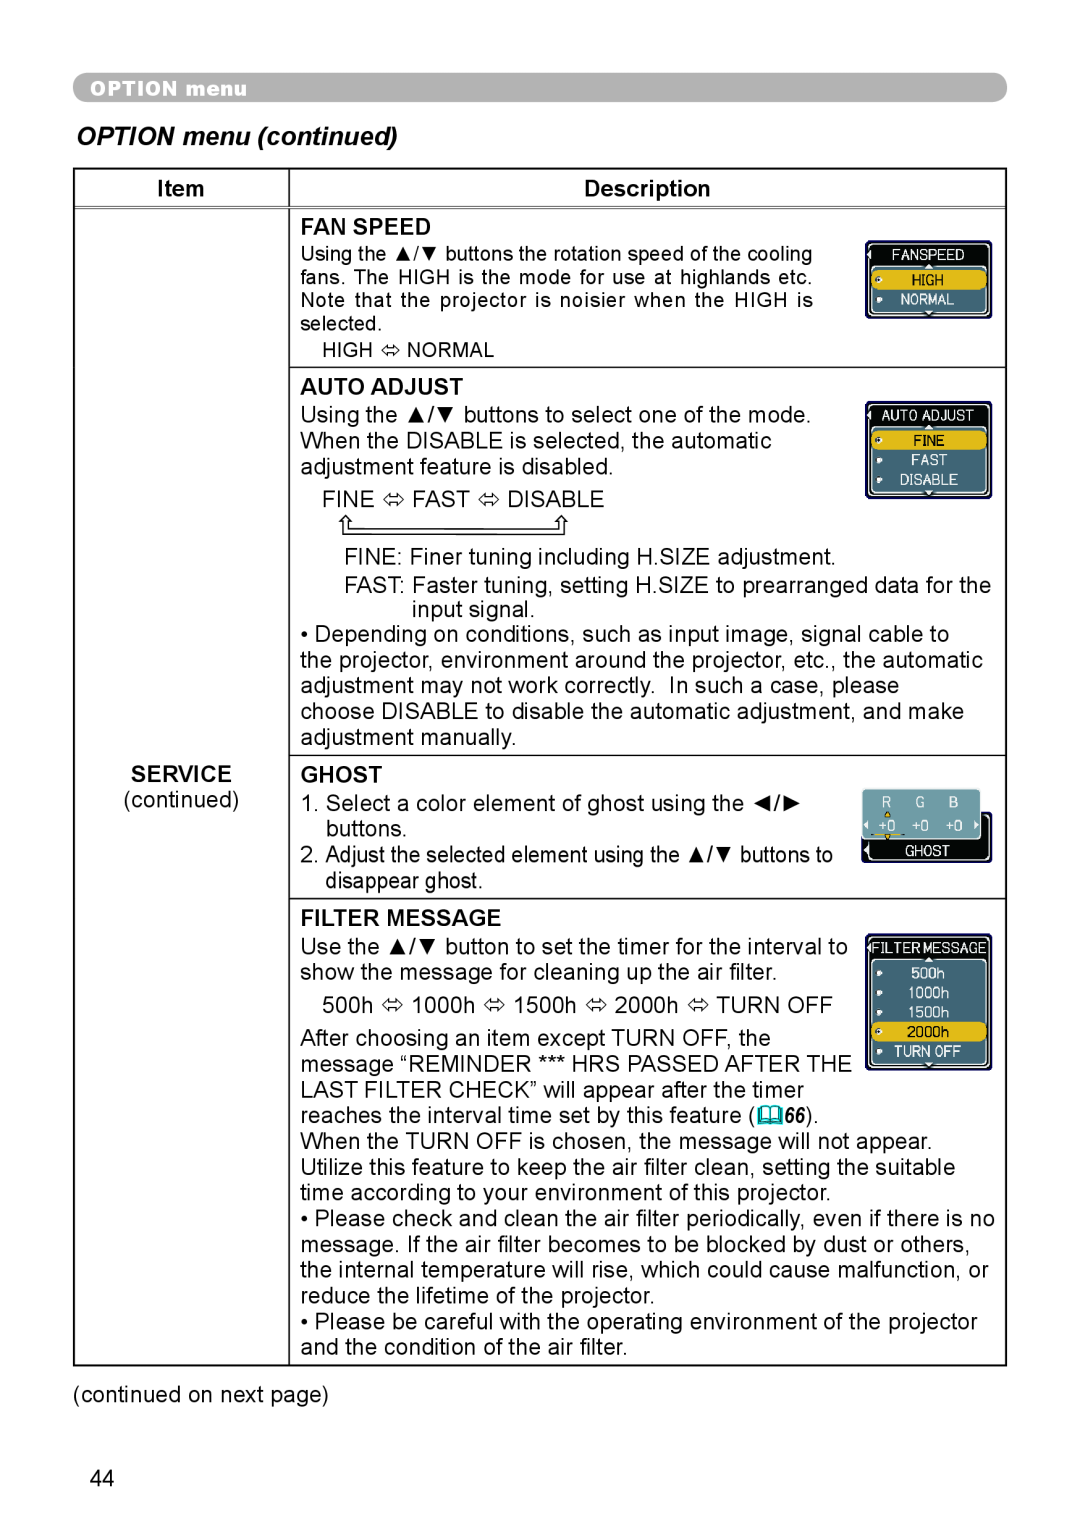 Hitachi CP-X206, CP-X306 OPTION menu continued, Description, Fan Speed, Auto Adjust, Service, Ghost, Filter Message 